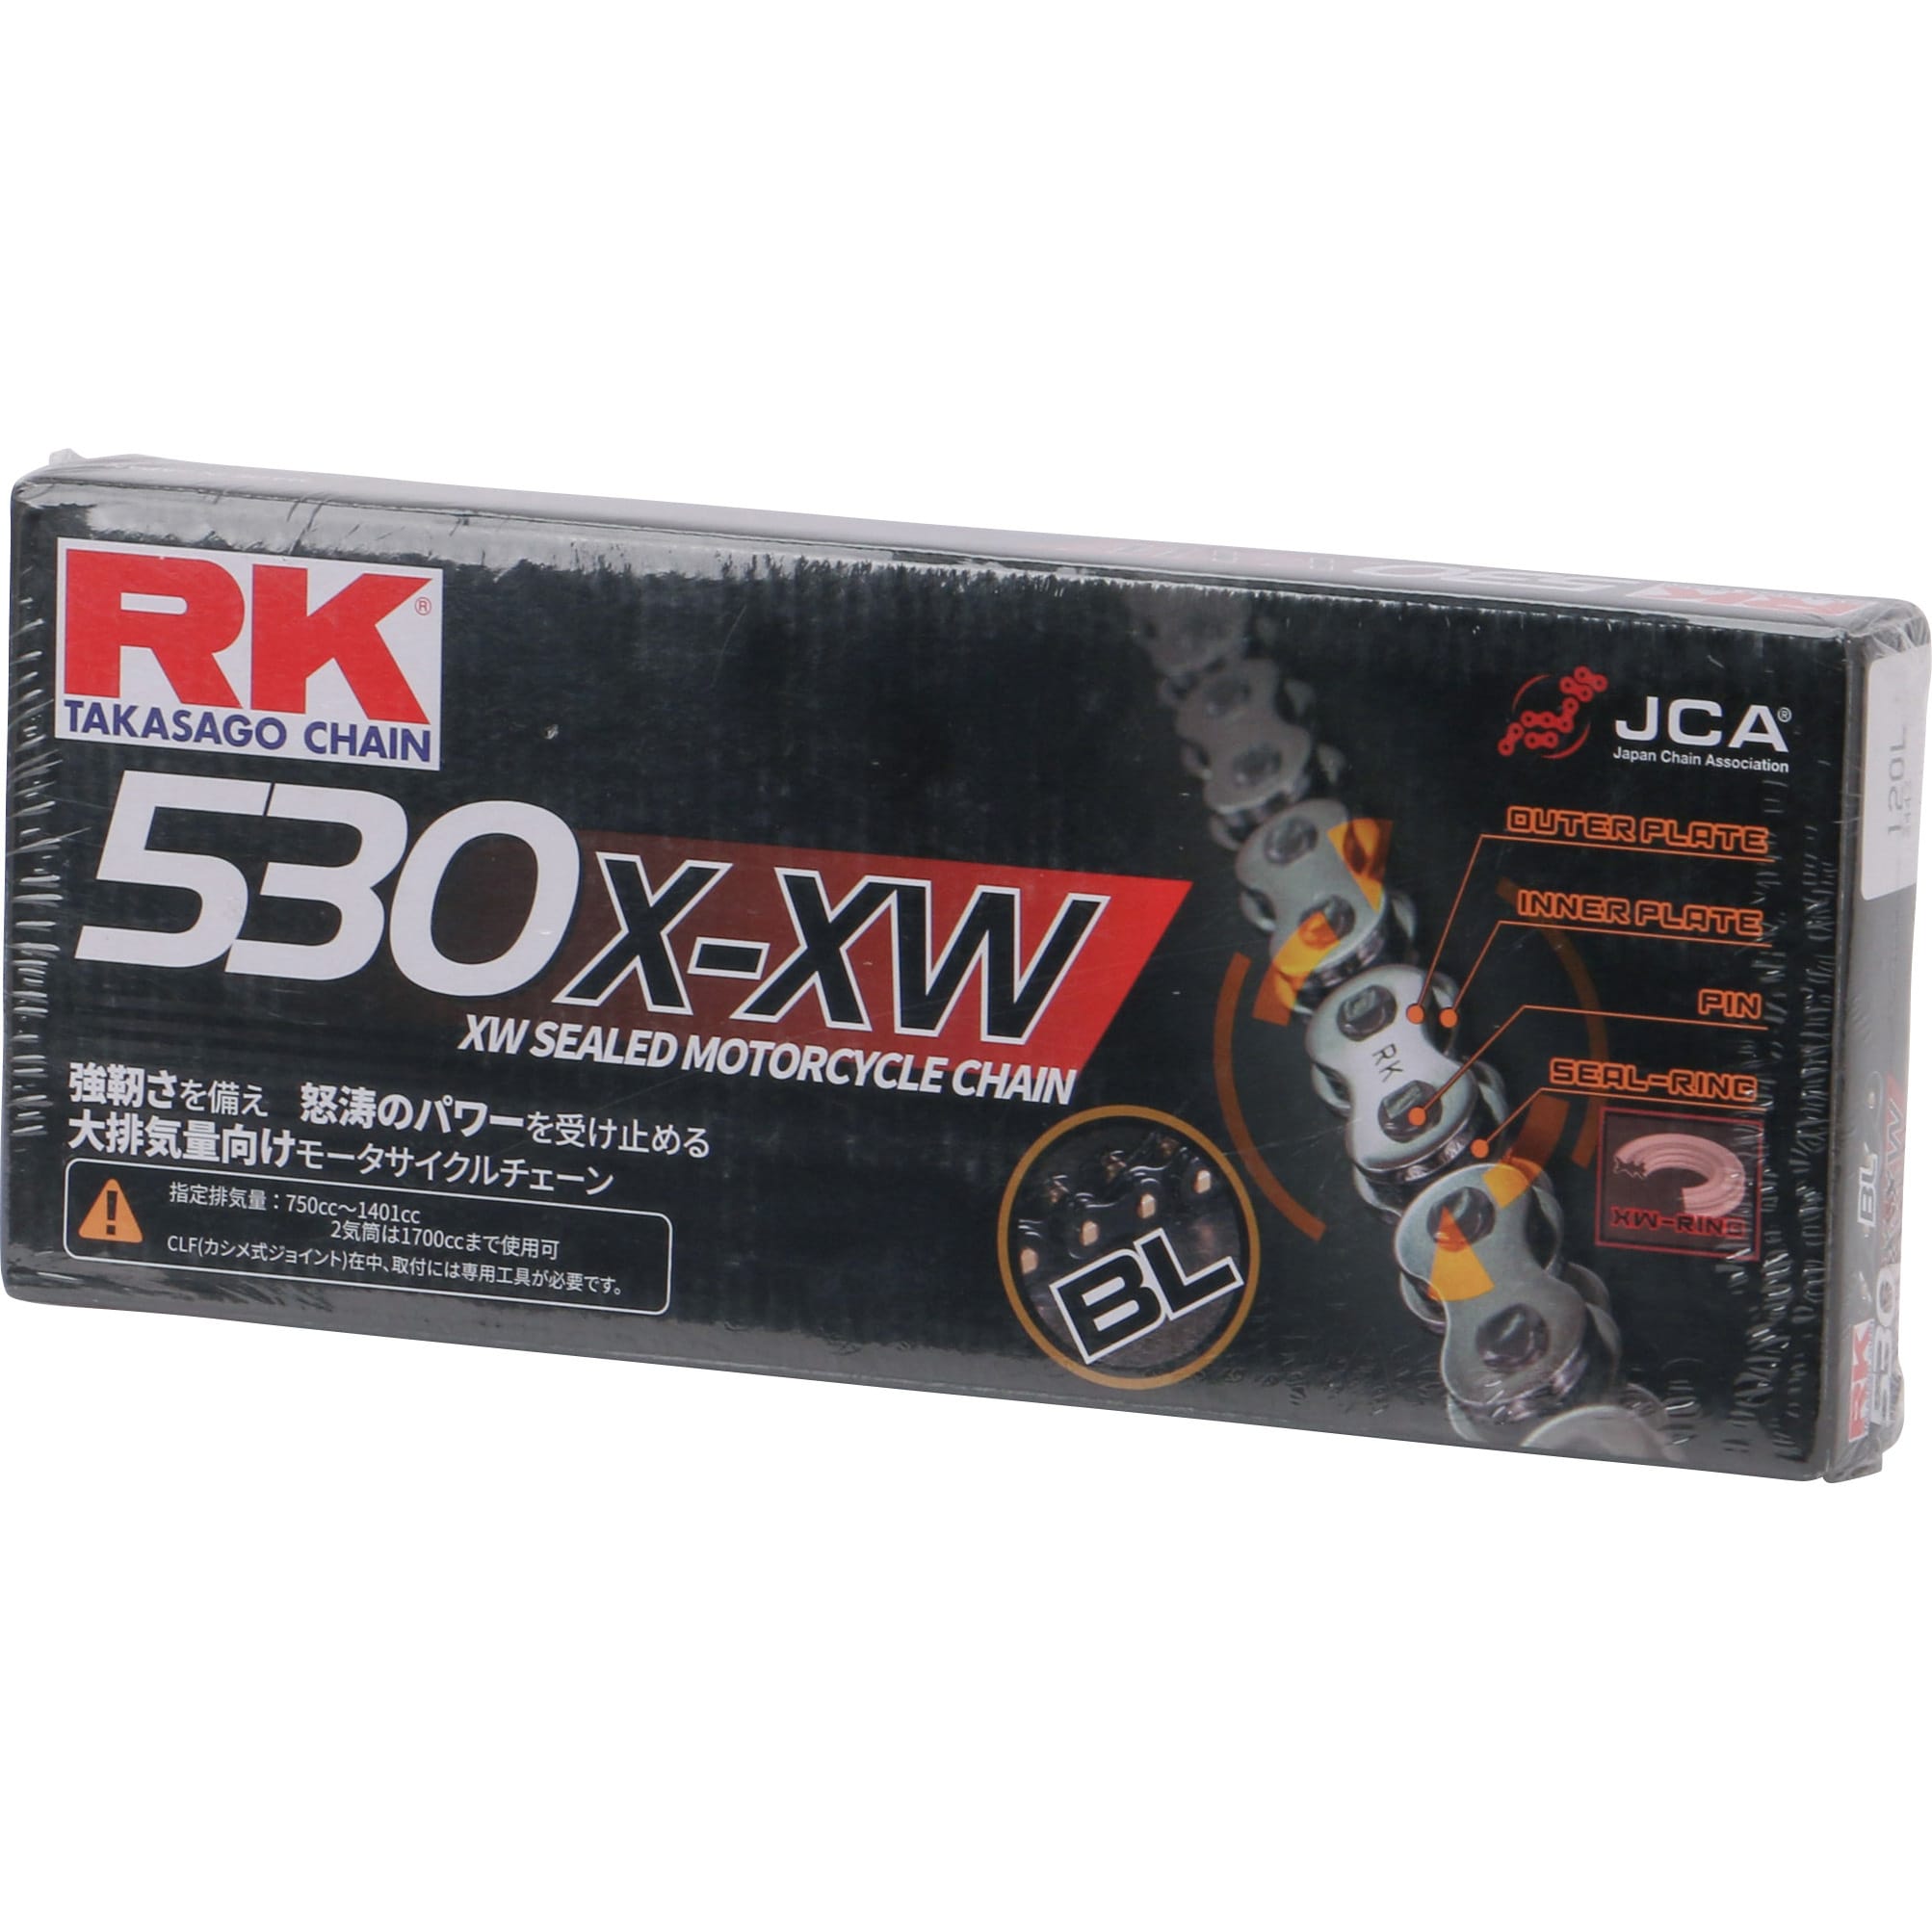 00-0227/RKチェーン BL530X・XW 120L Chain【送料無料